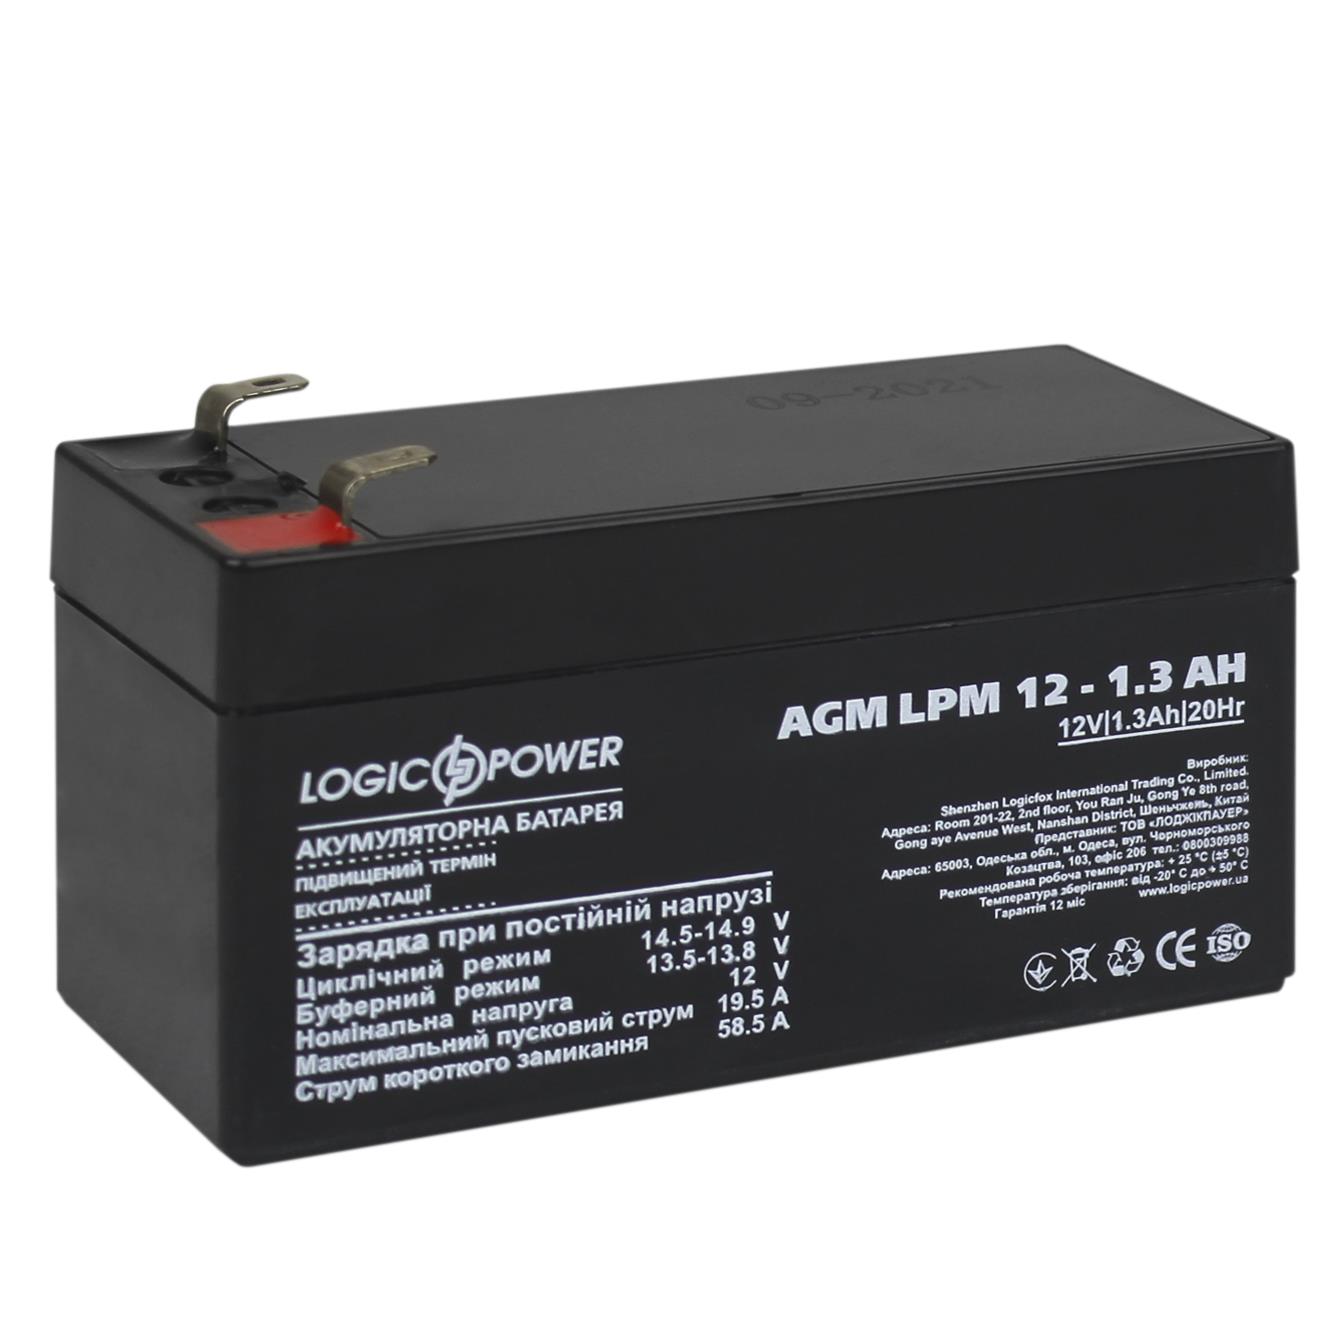 Аккумулятор свинцово-кислотный LogicPower AGM LPM 12V - 1.3 Ah (4131) цена 285.00 грн - фотография 2